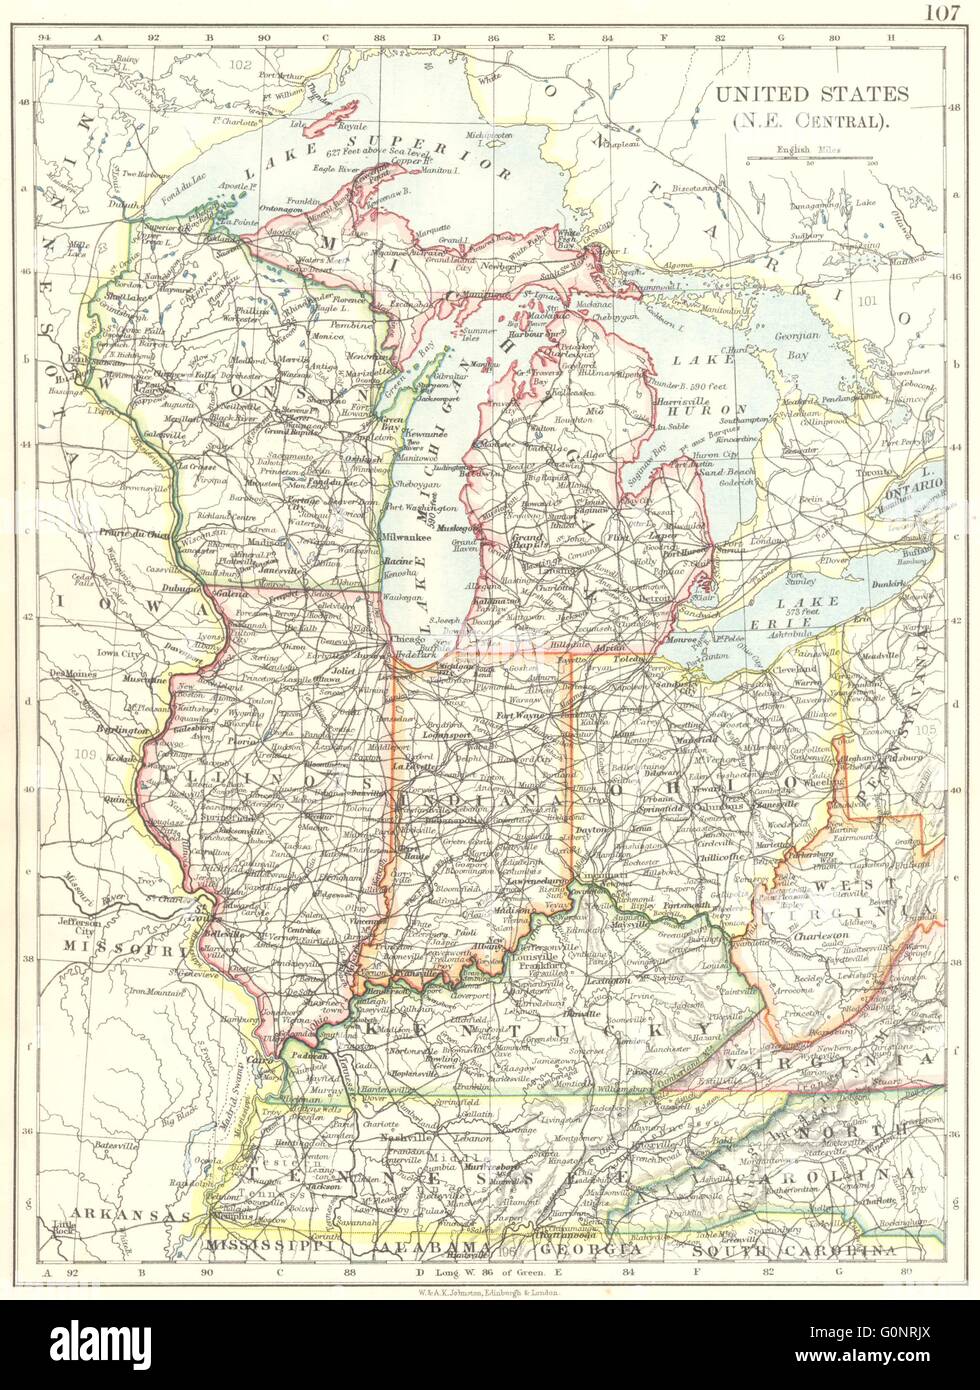 USA MID WEST. Wisconsin Michigan Illinois Ohio Indiana Kentucky TN, 1899 map Stock Photo